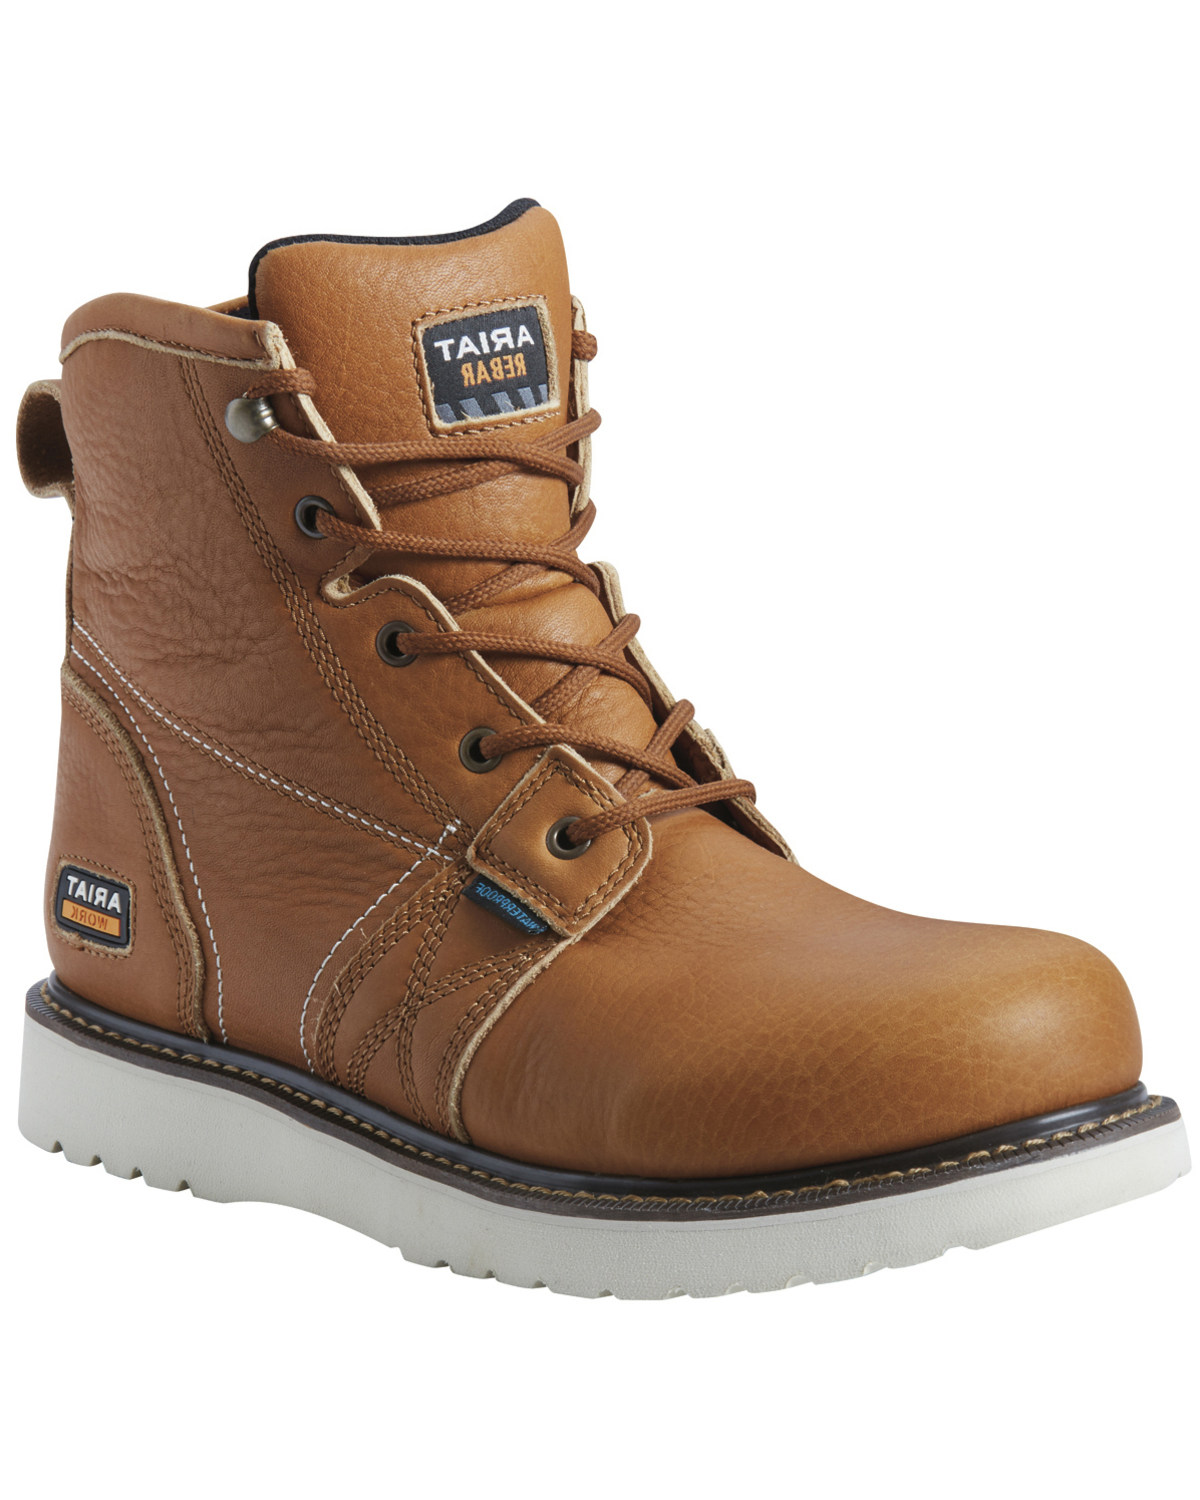 men's soft toe waterproof work boots